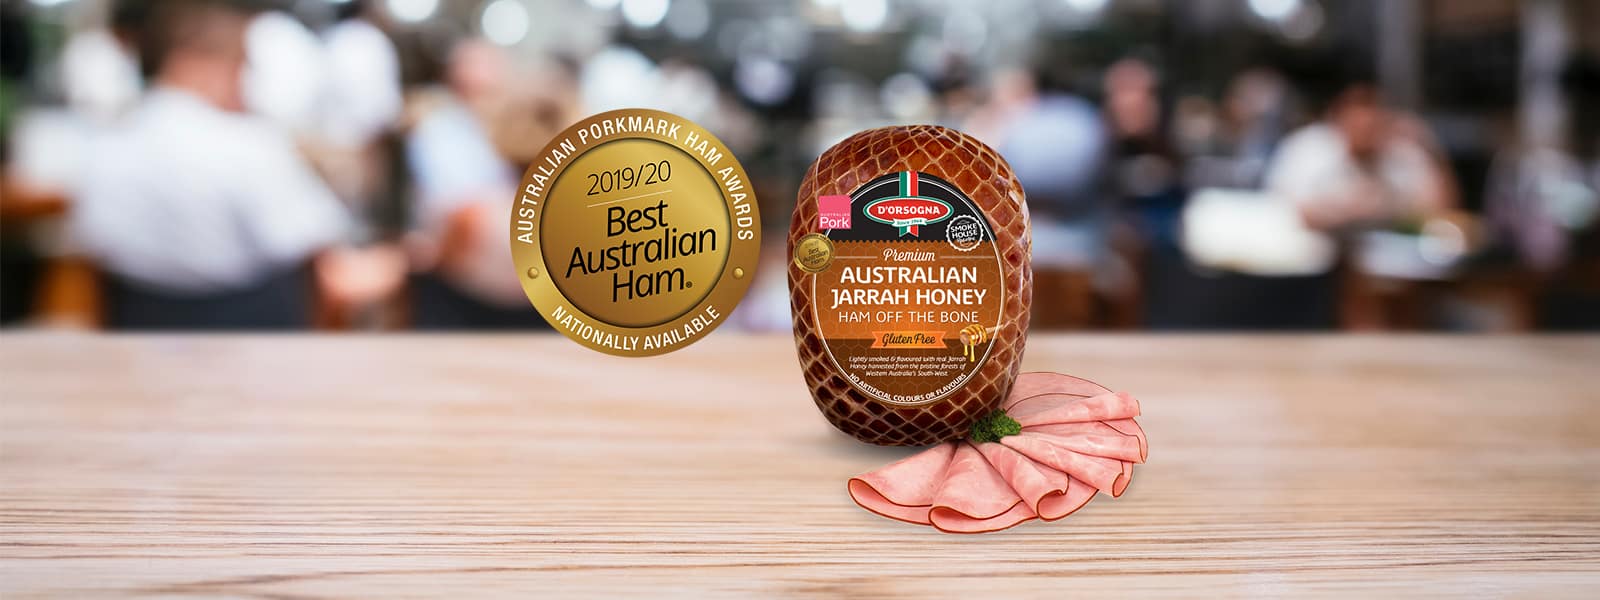 Best nationally available Australian ham announced